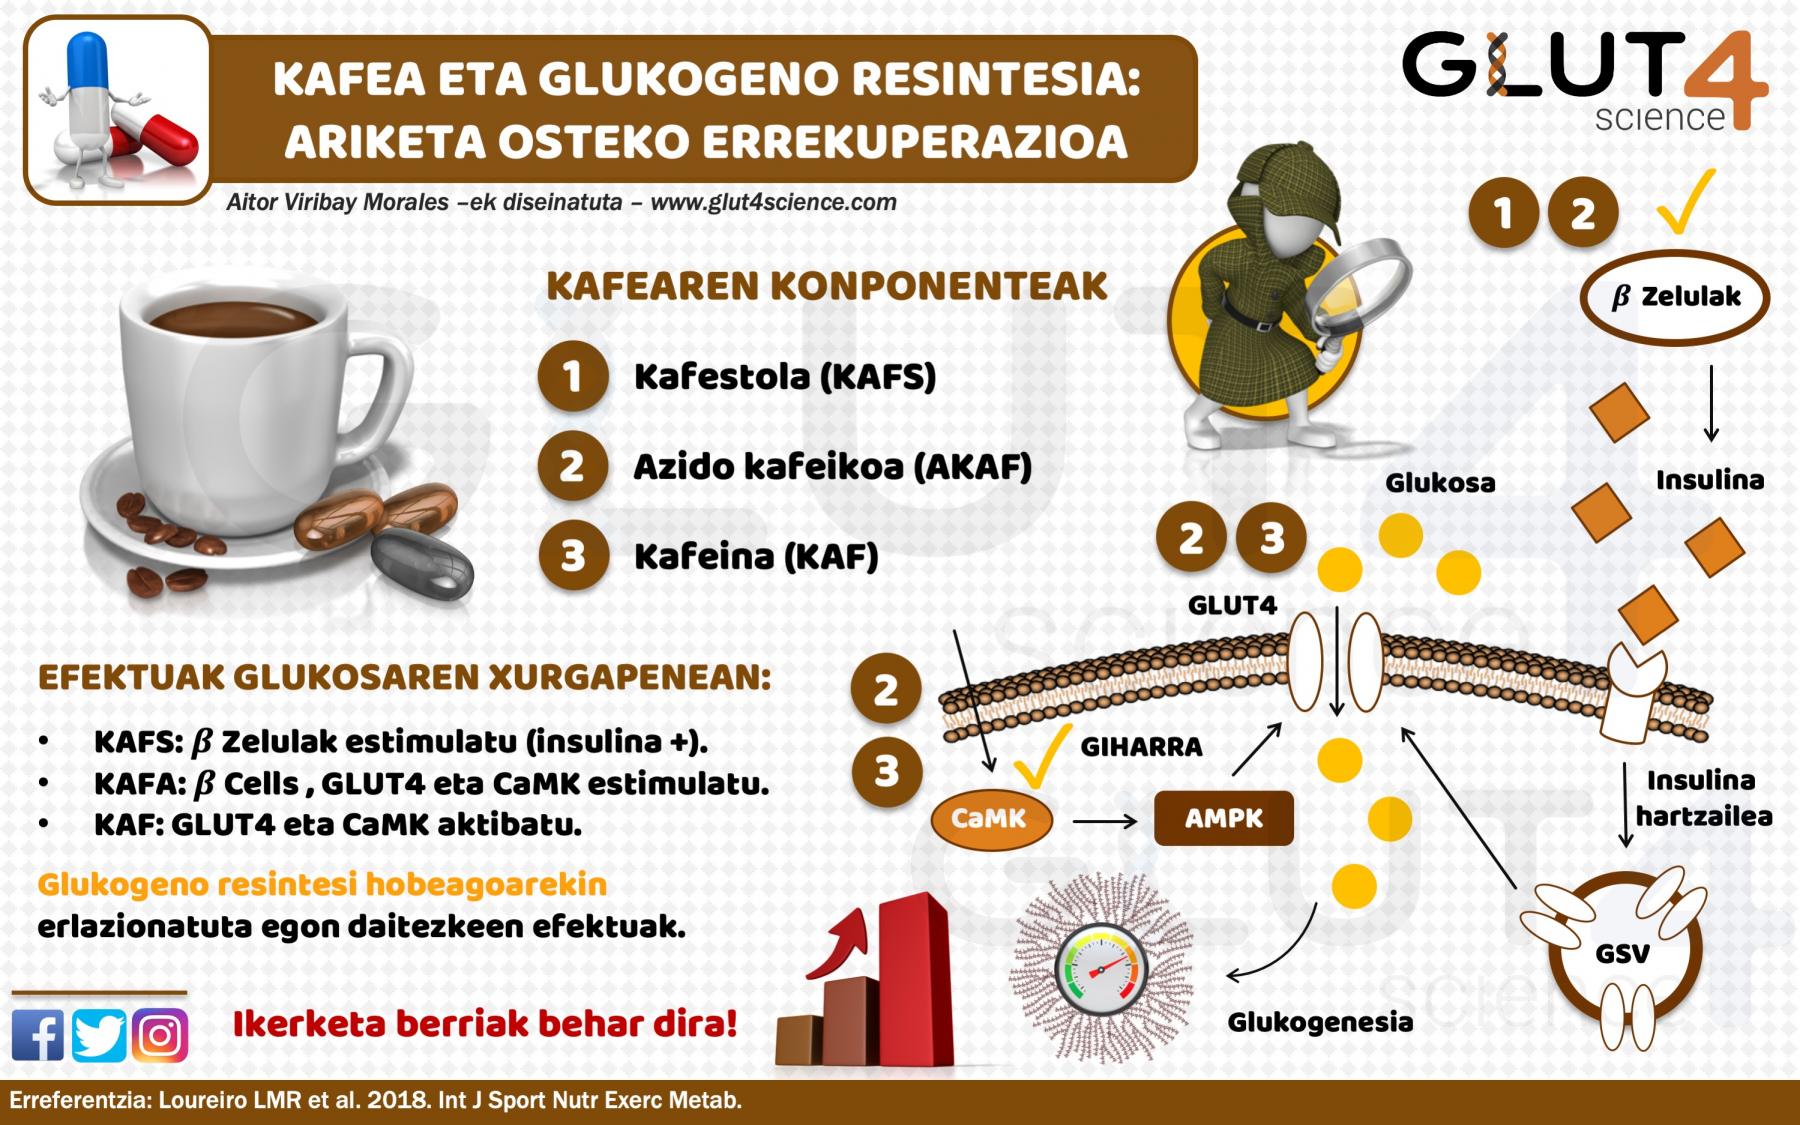 Kafea eta glukogeno resintesia